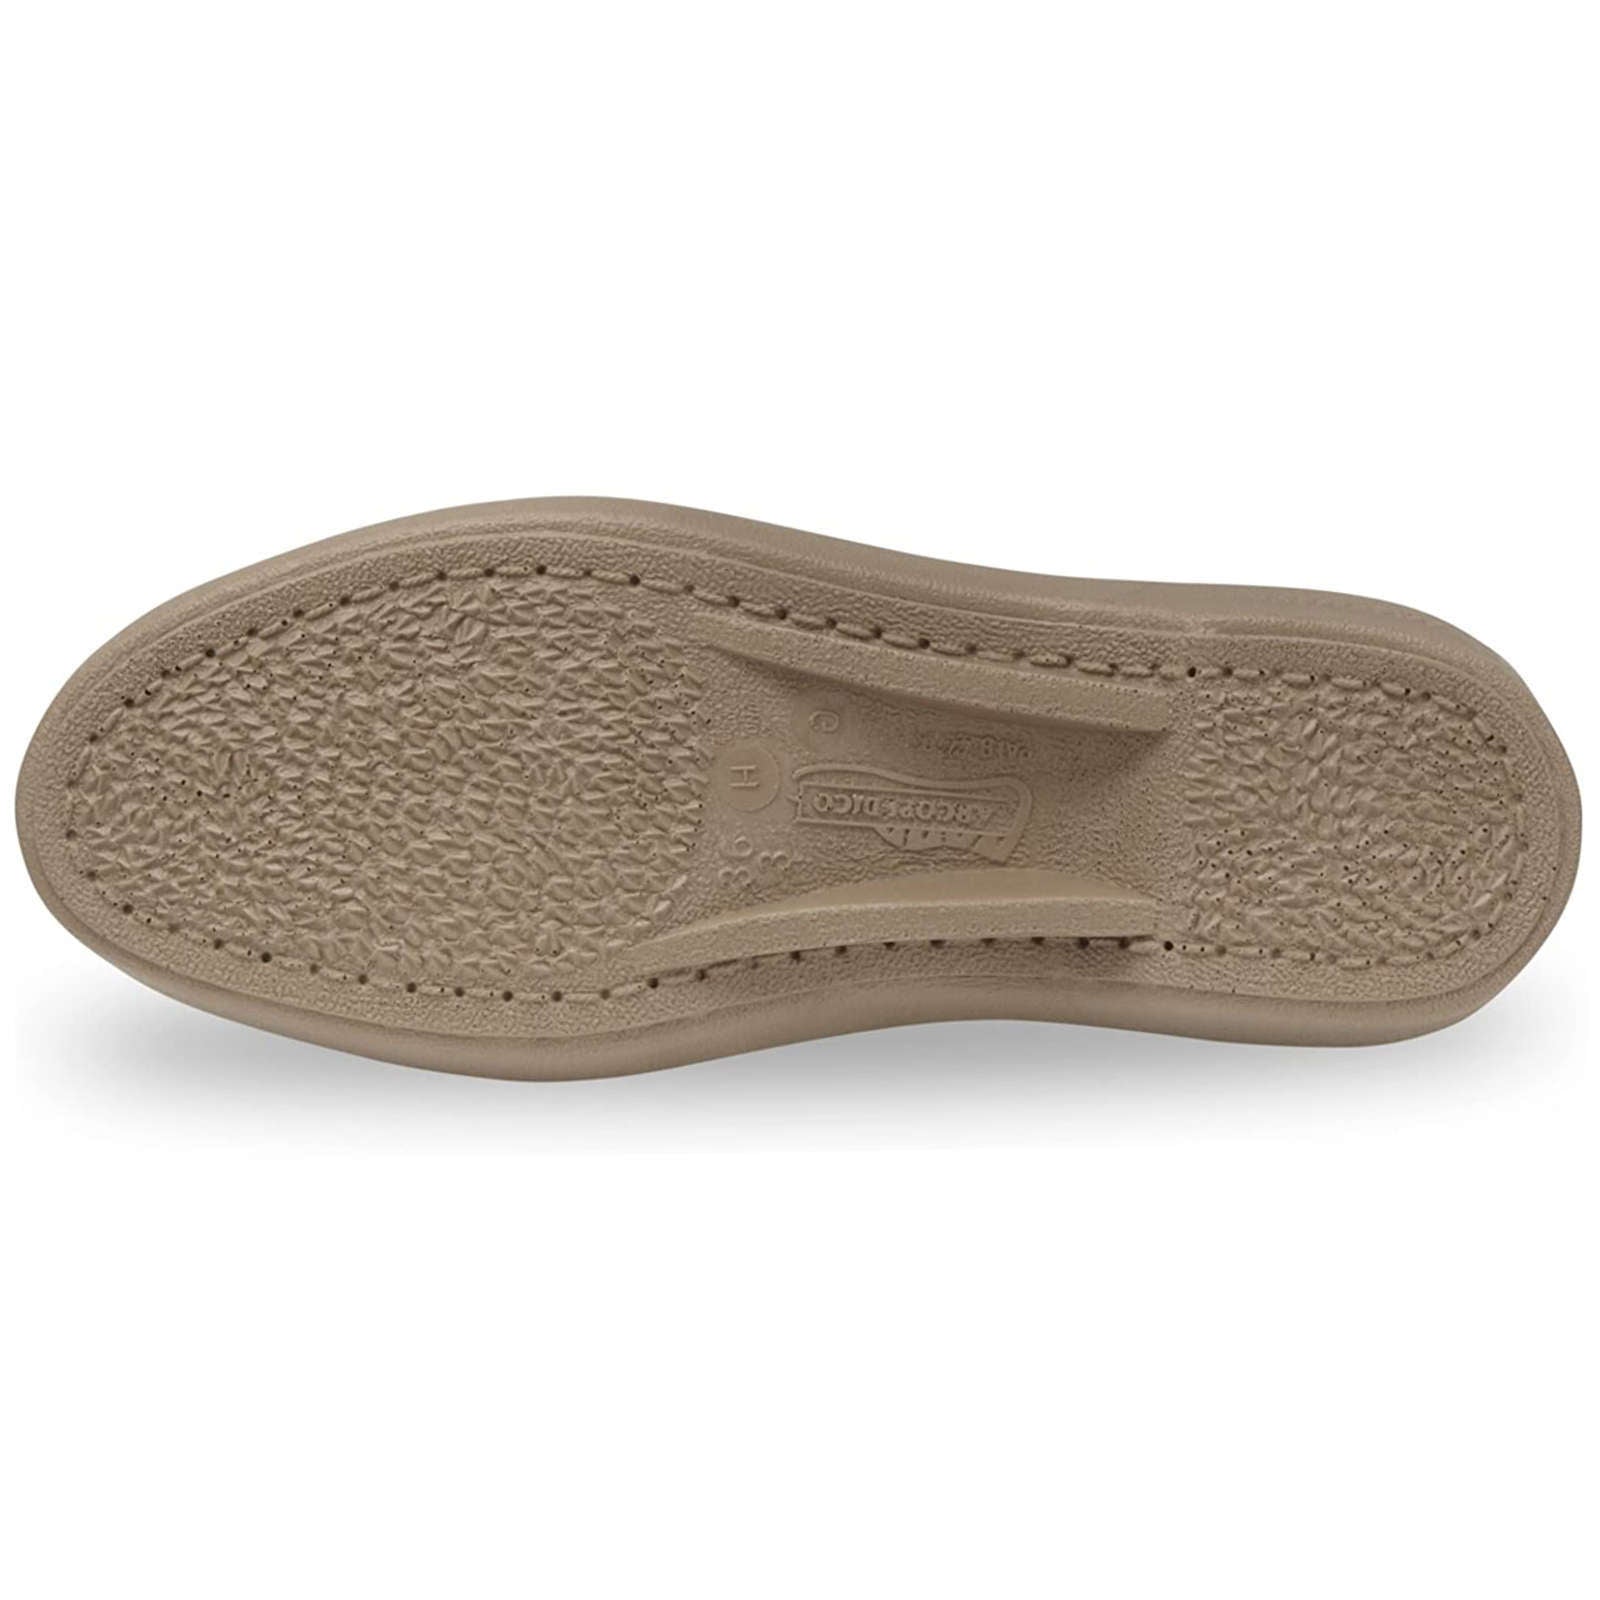 Arcopedico New Sec Nylon Women's Slip-on Shoes#color_beige